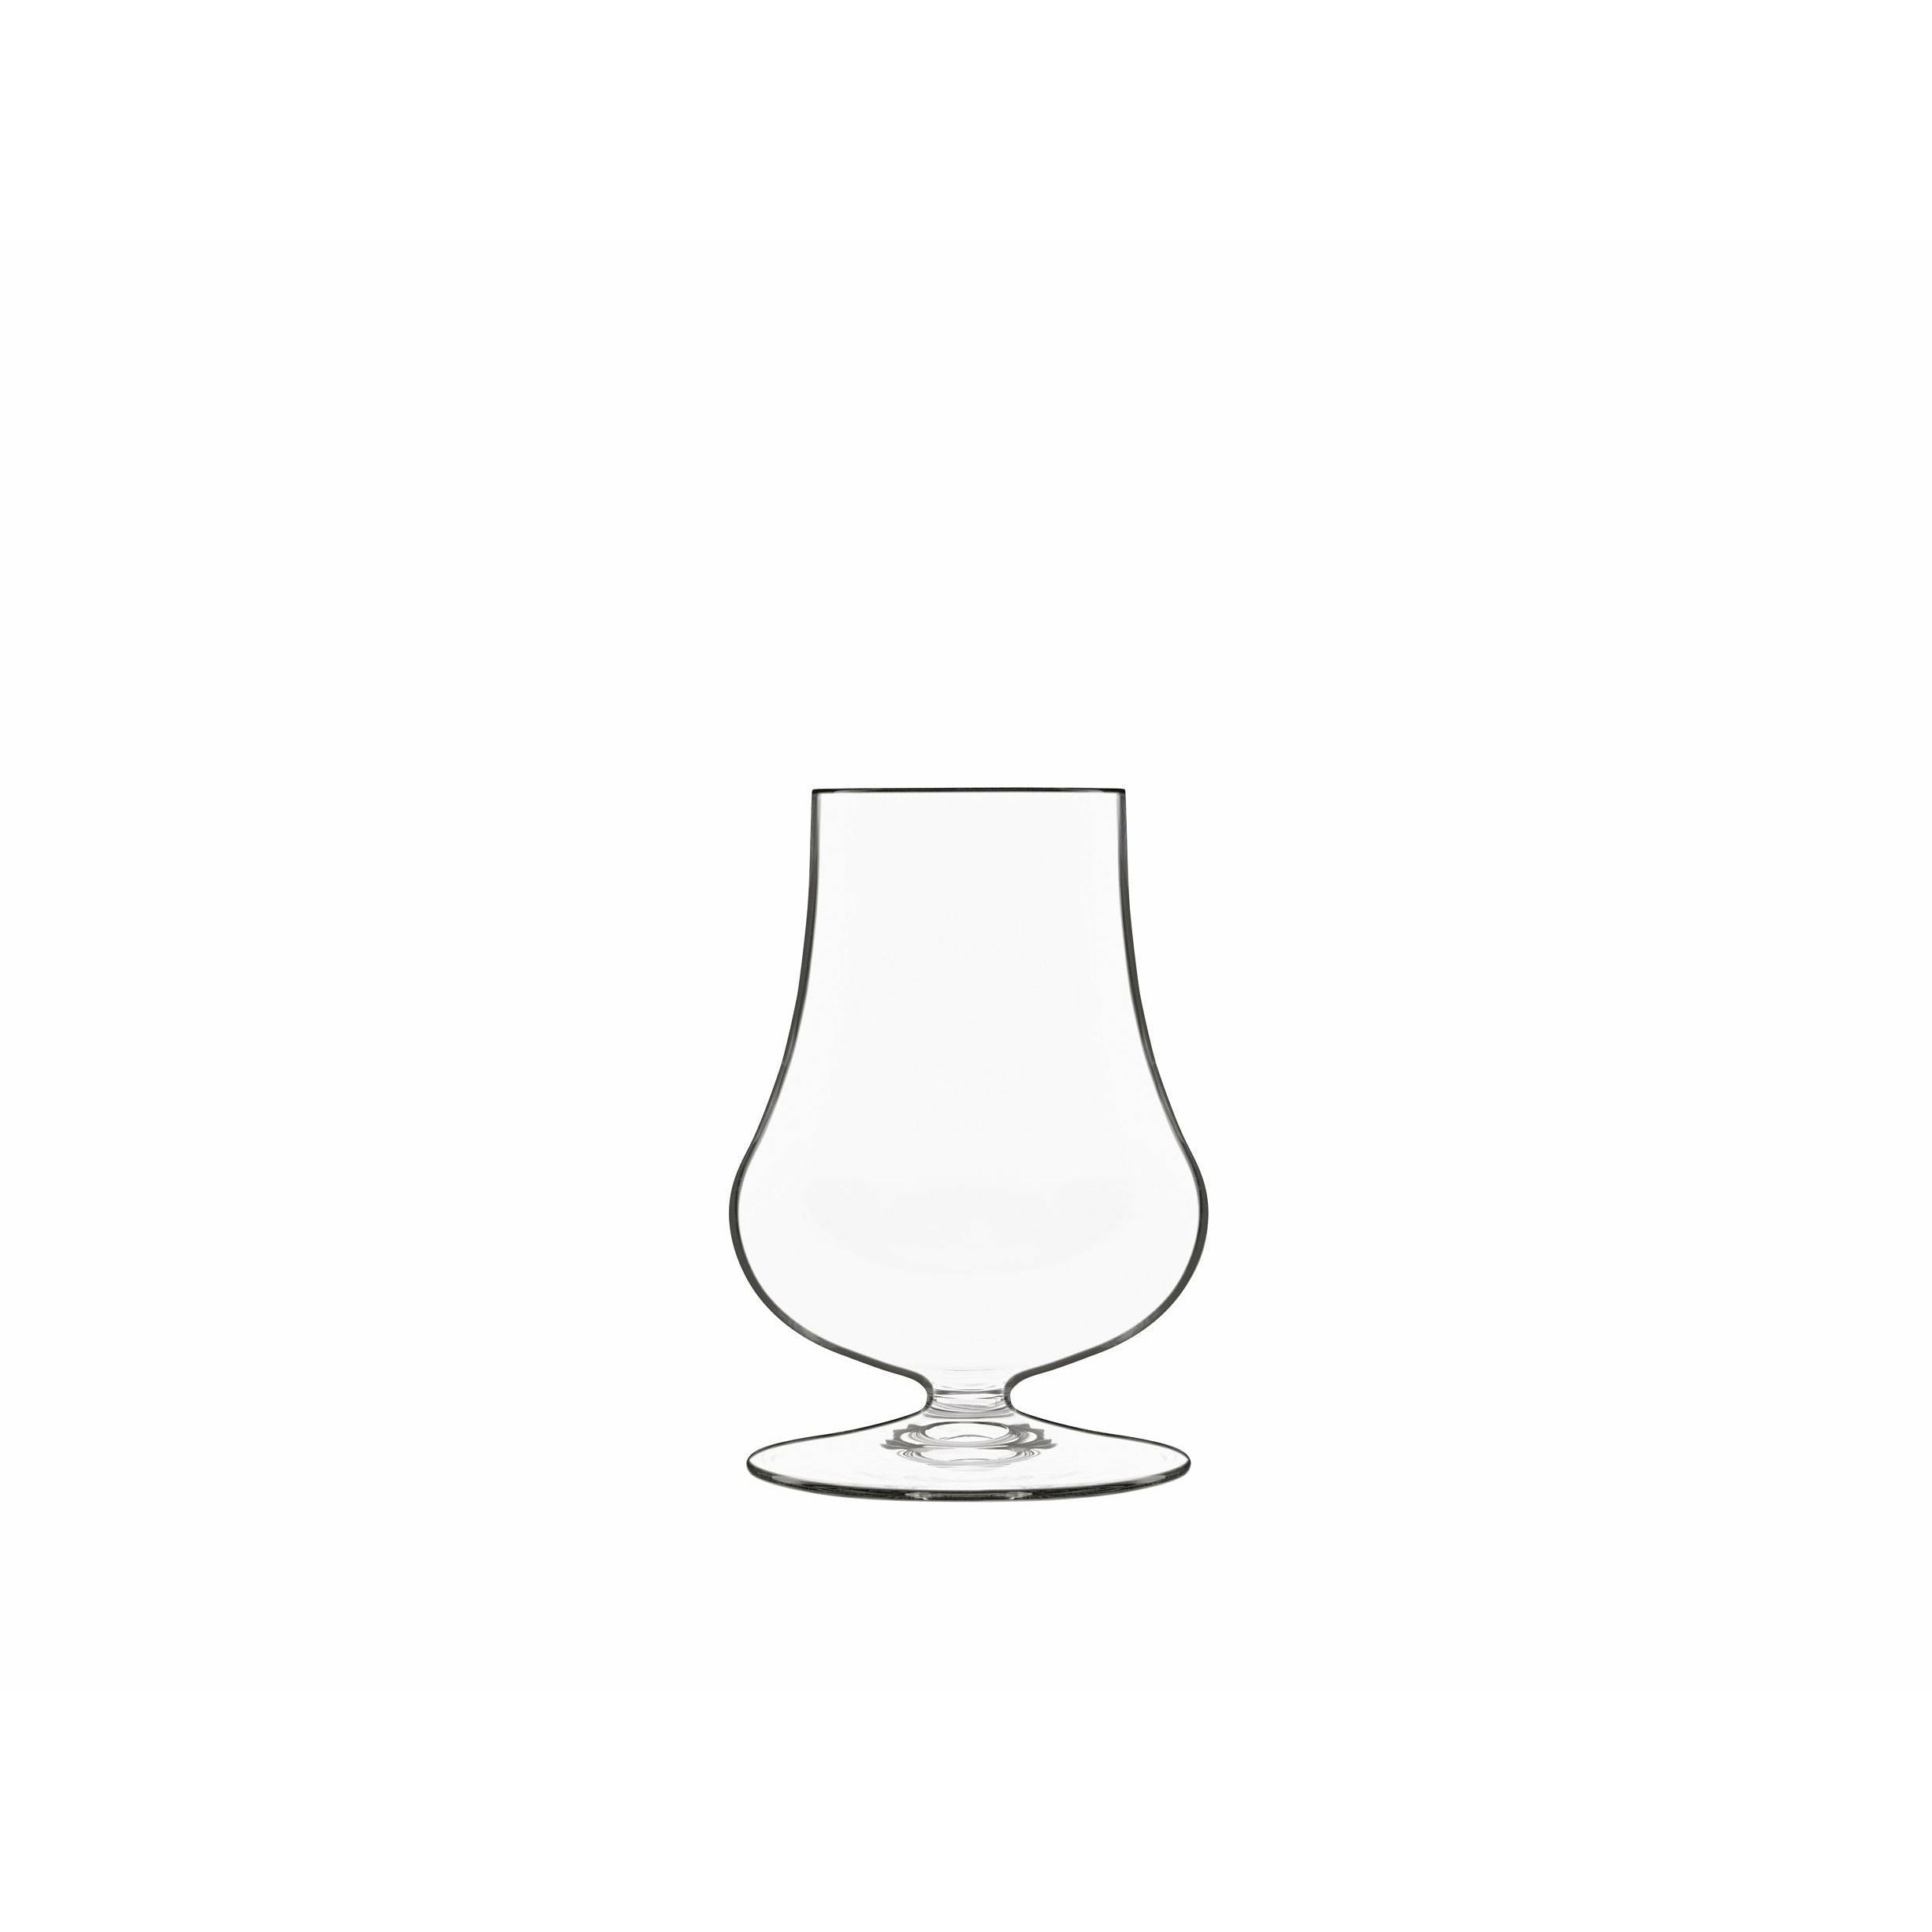 Luigi Bormioli Tentazioni Spirits Glass/Whisky Glass etter smak, sett med 6